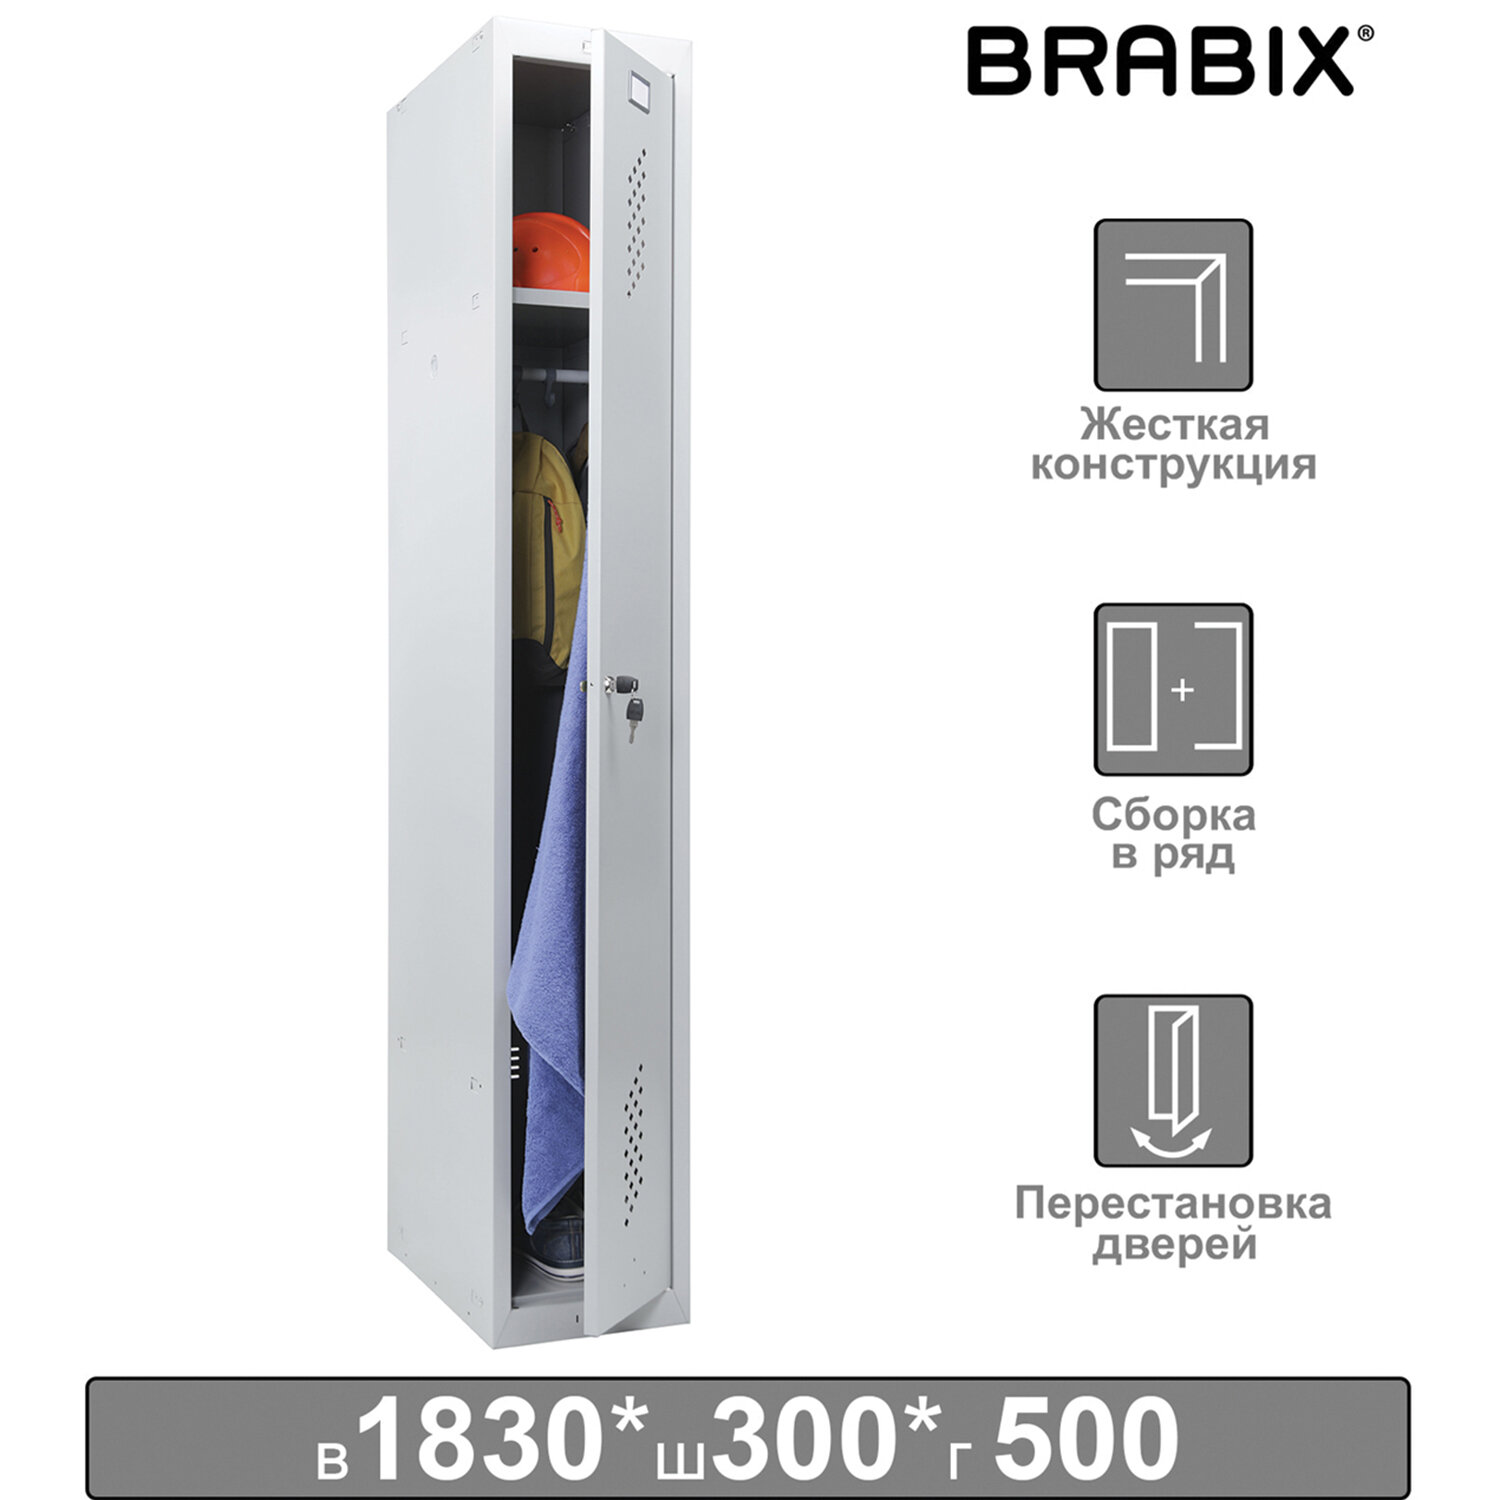     BRABIX LK 11-30, , 1 , 1830300500 ,18 , 291127, S230BR401102